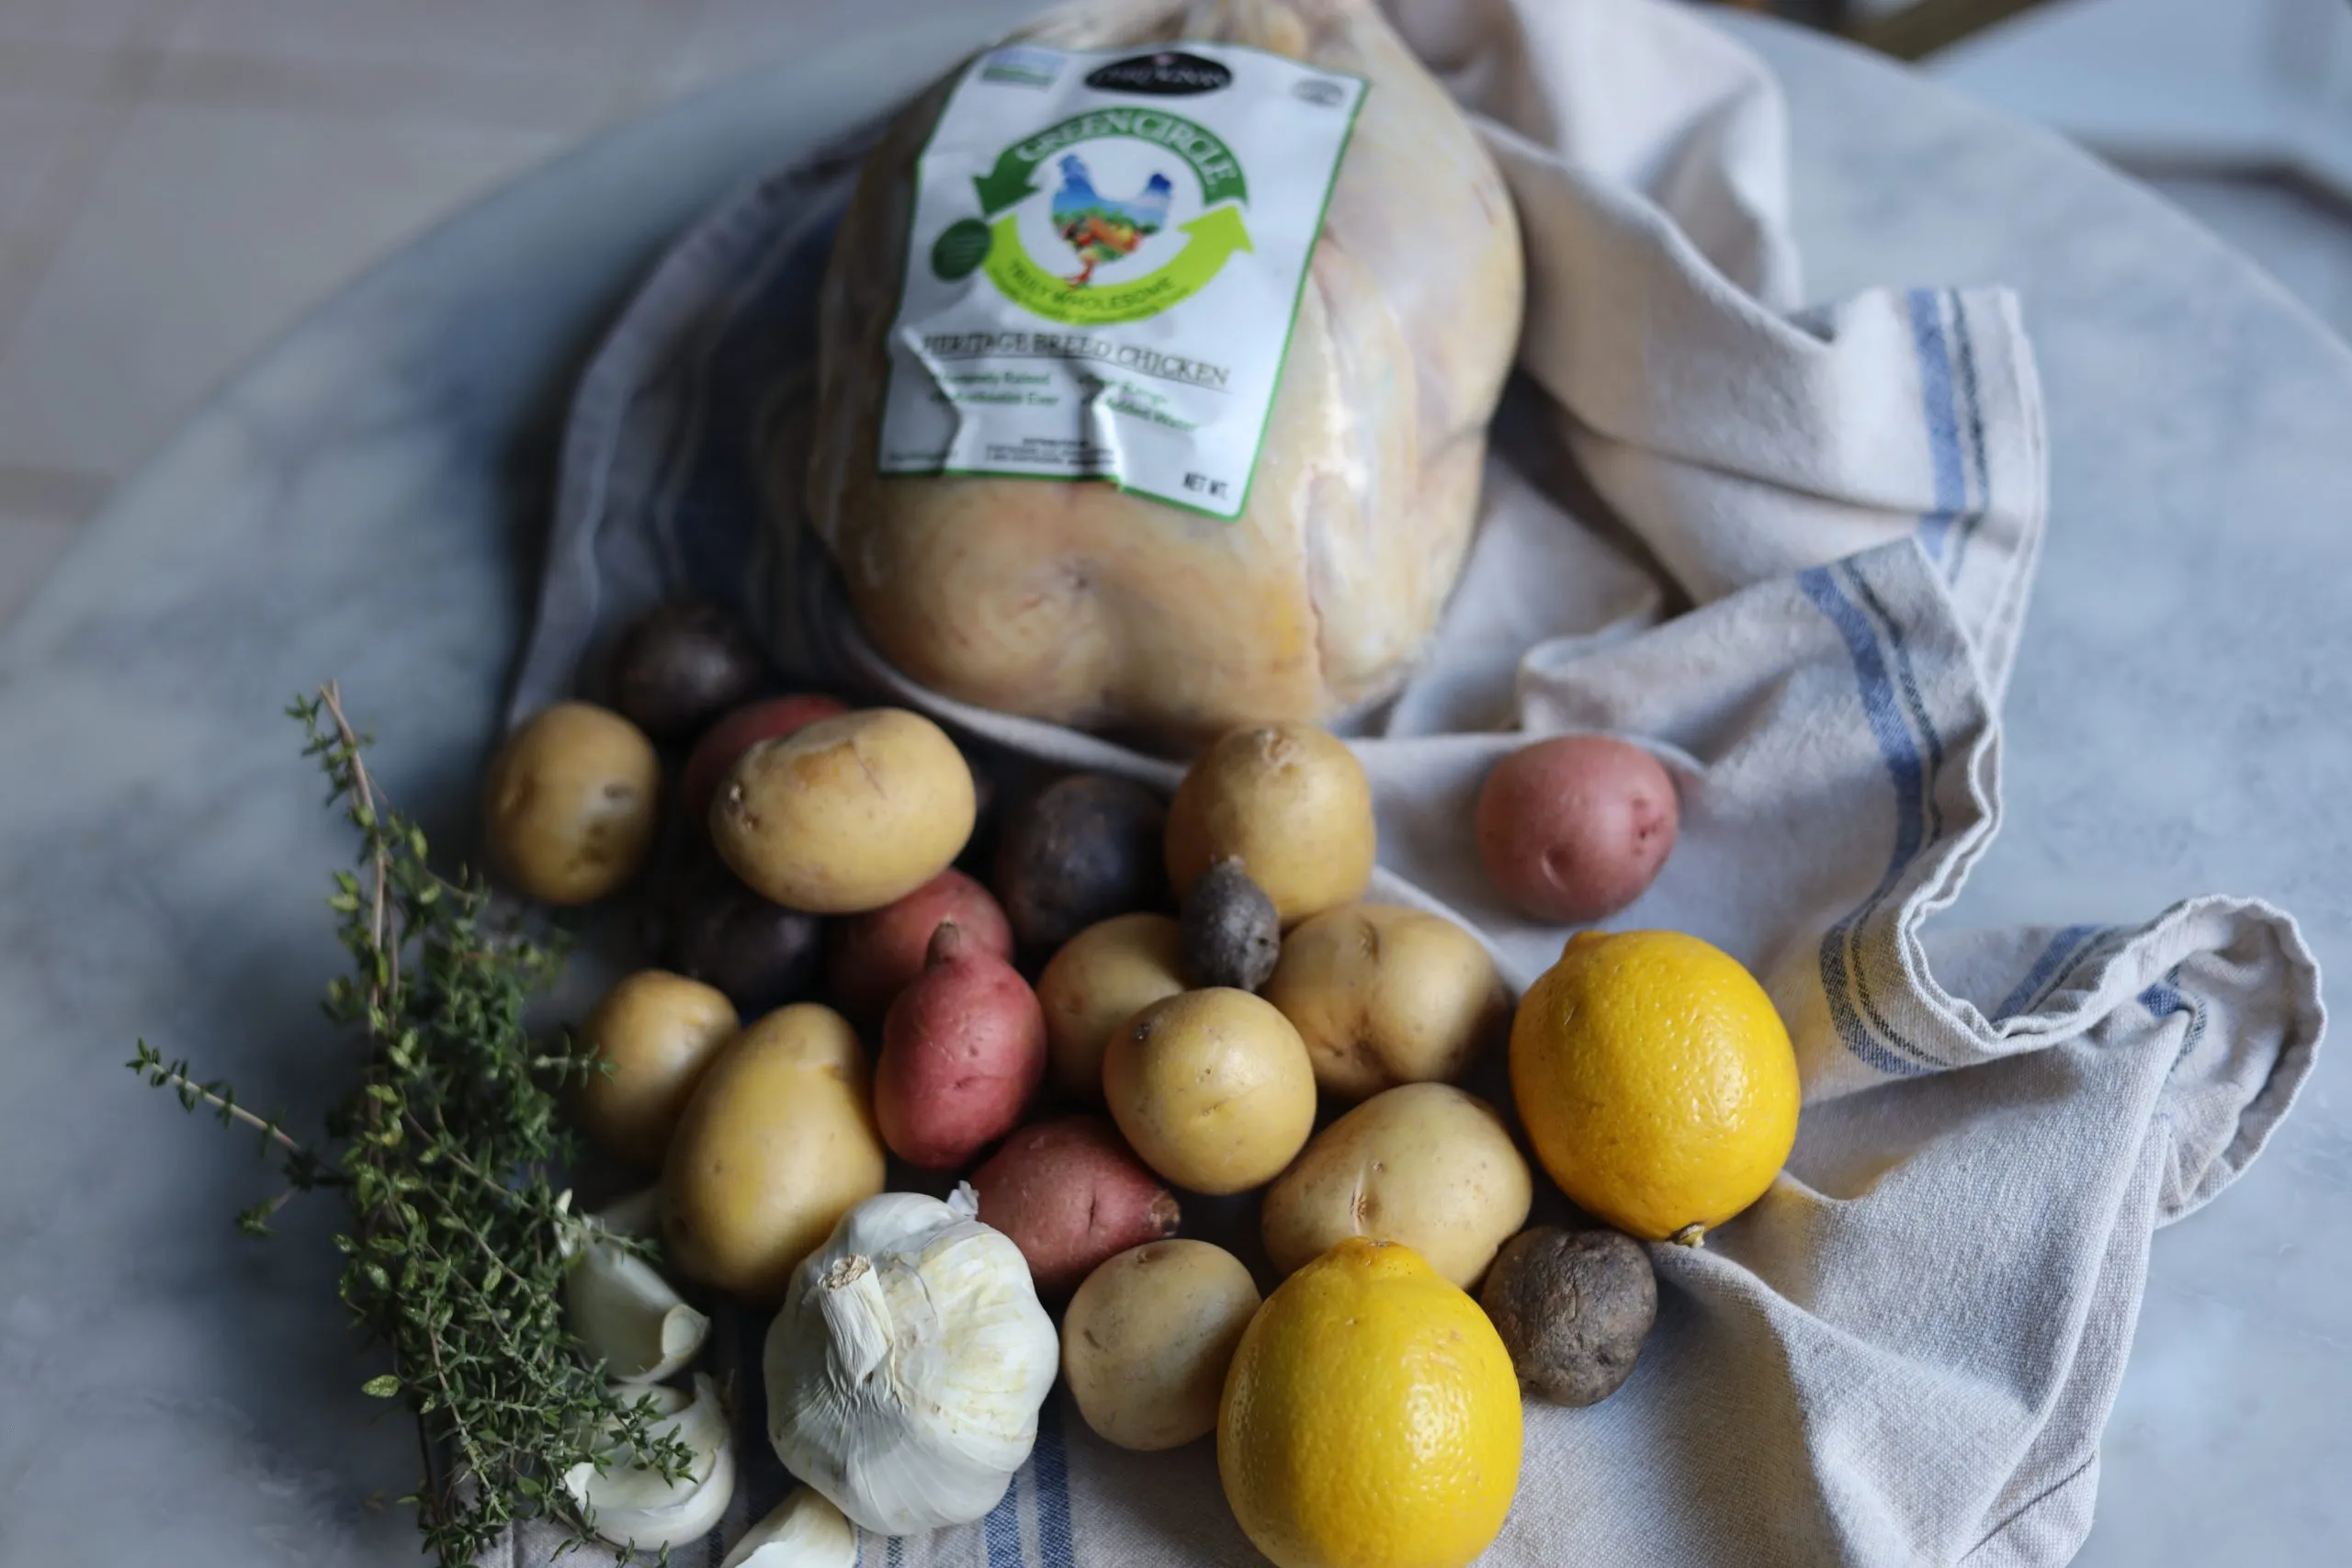 ingredients for poulet roti- chicken, potatoes, garlic, lemon and thyme